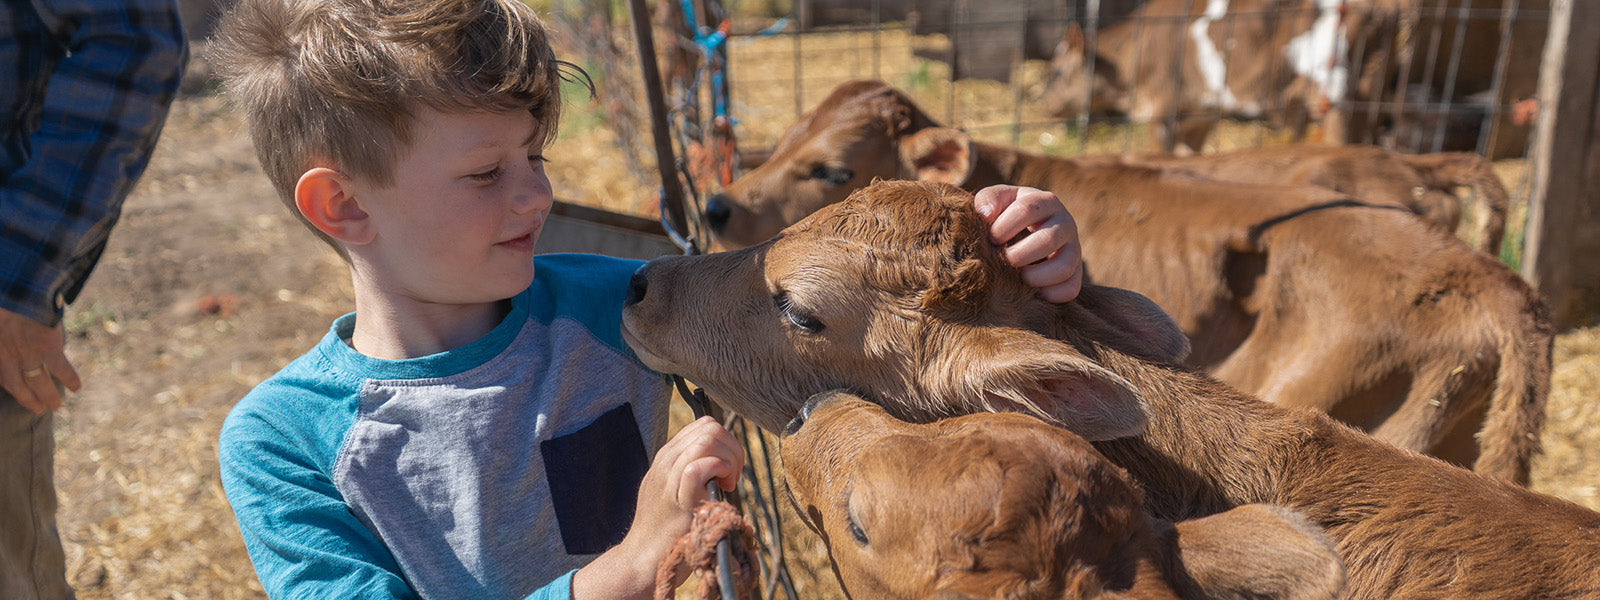 Cute kid petting a calf